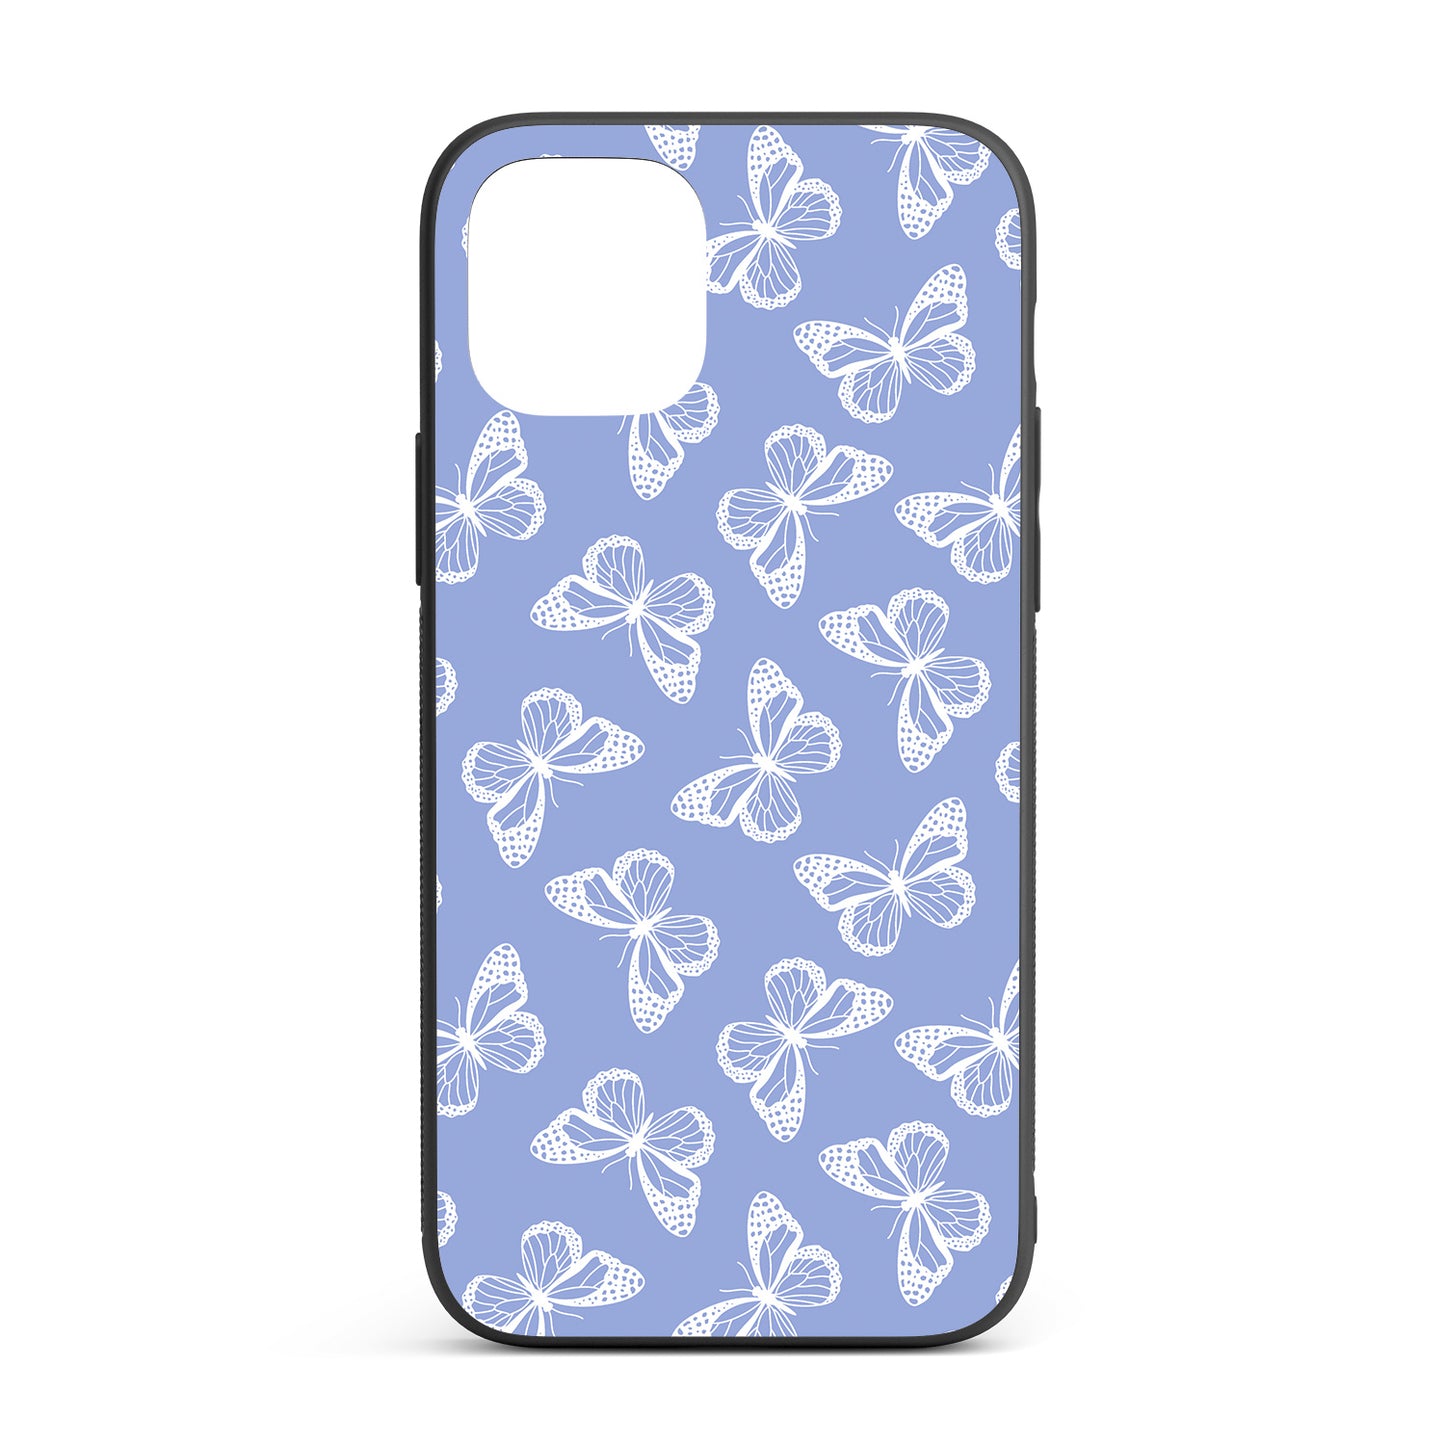 Lavender Butterflies iPhone glass case